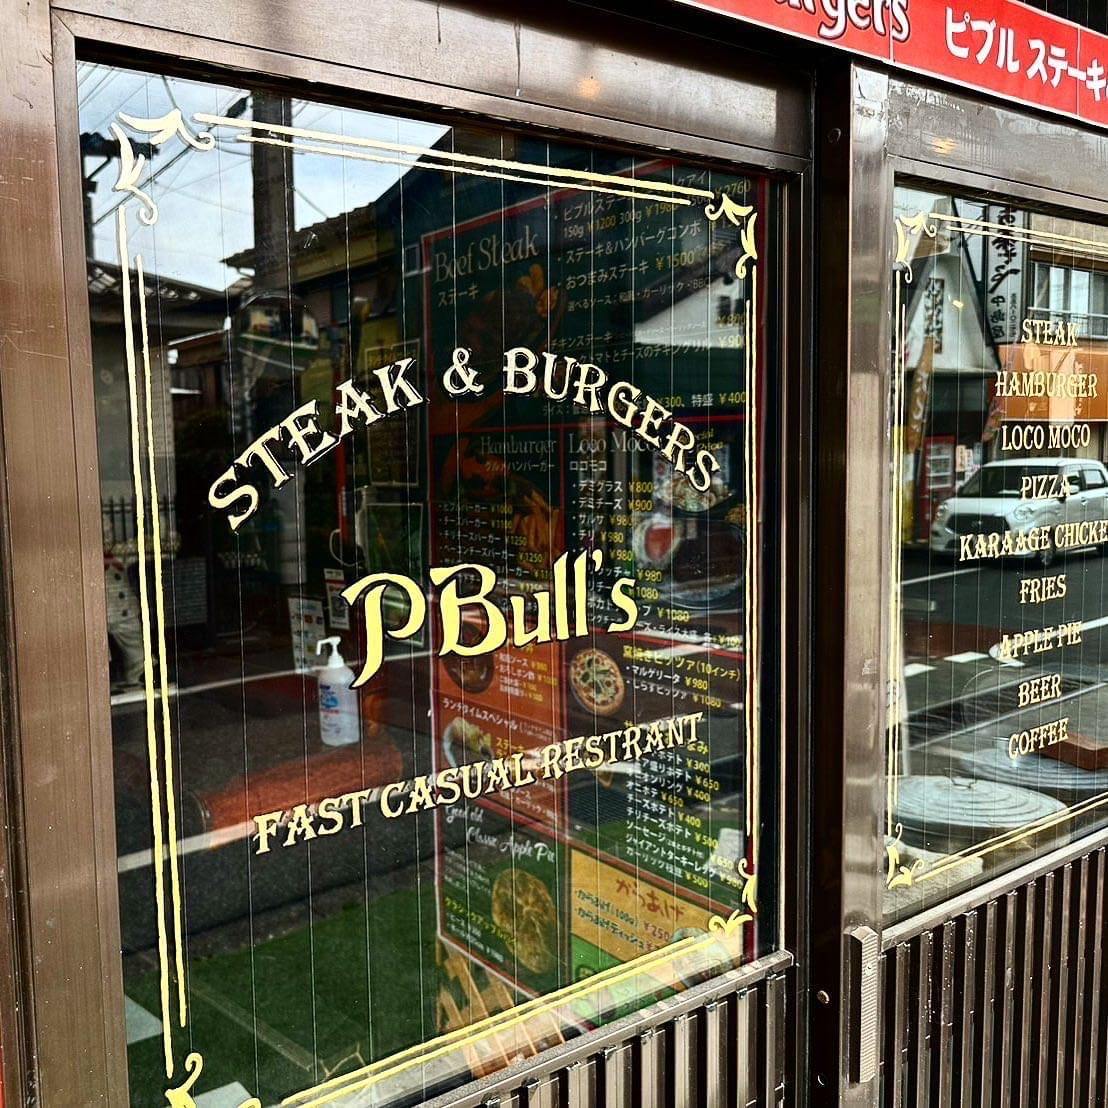 PBull Steak & Burgers(ピブルステーキアンドバーガーズ)のURL1